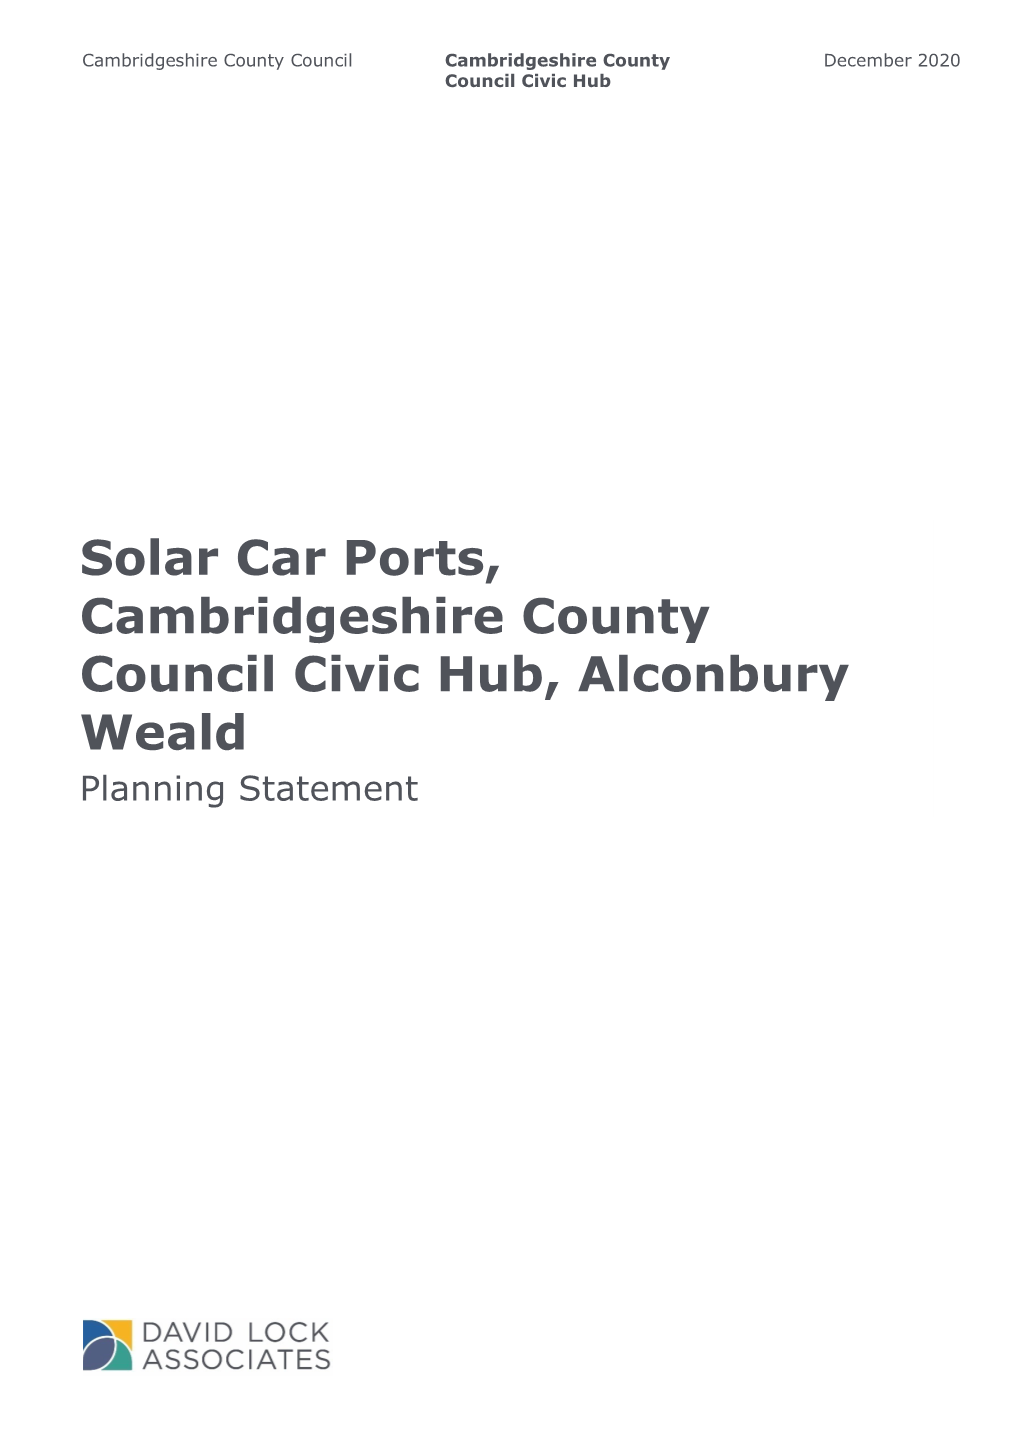 Solar Car Ports, Cambridgeshire County Council Civic Hub, Alconbury Weald Planning Statement